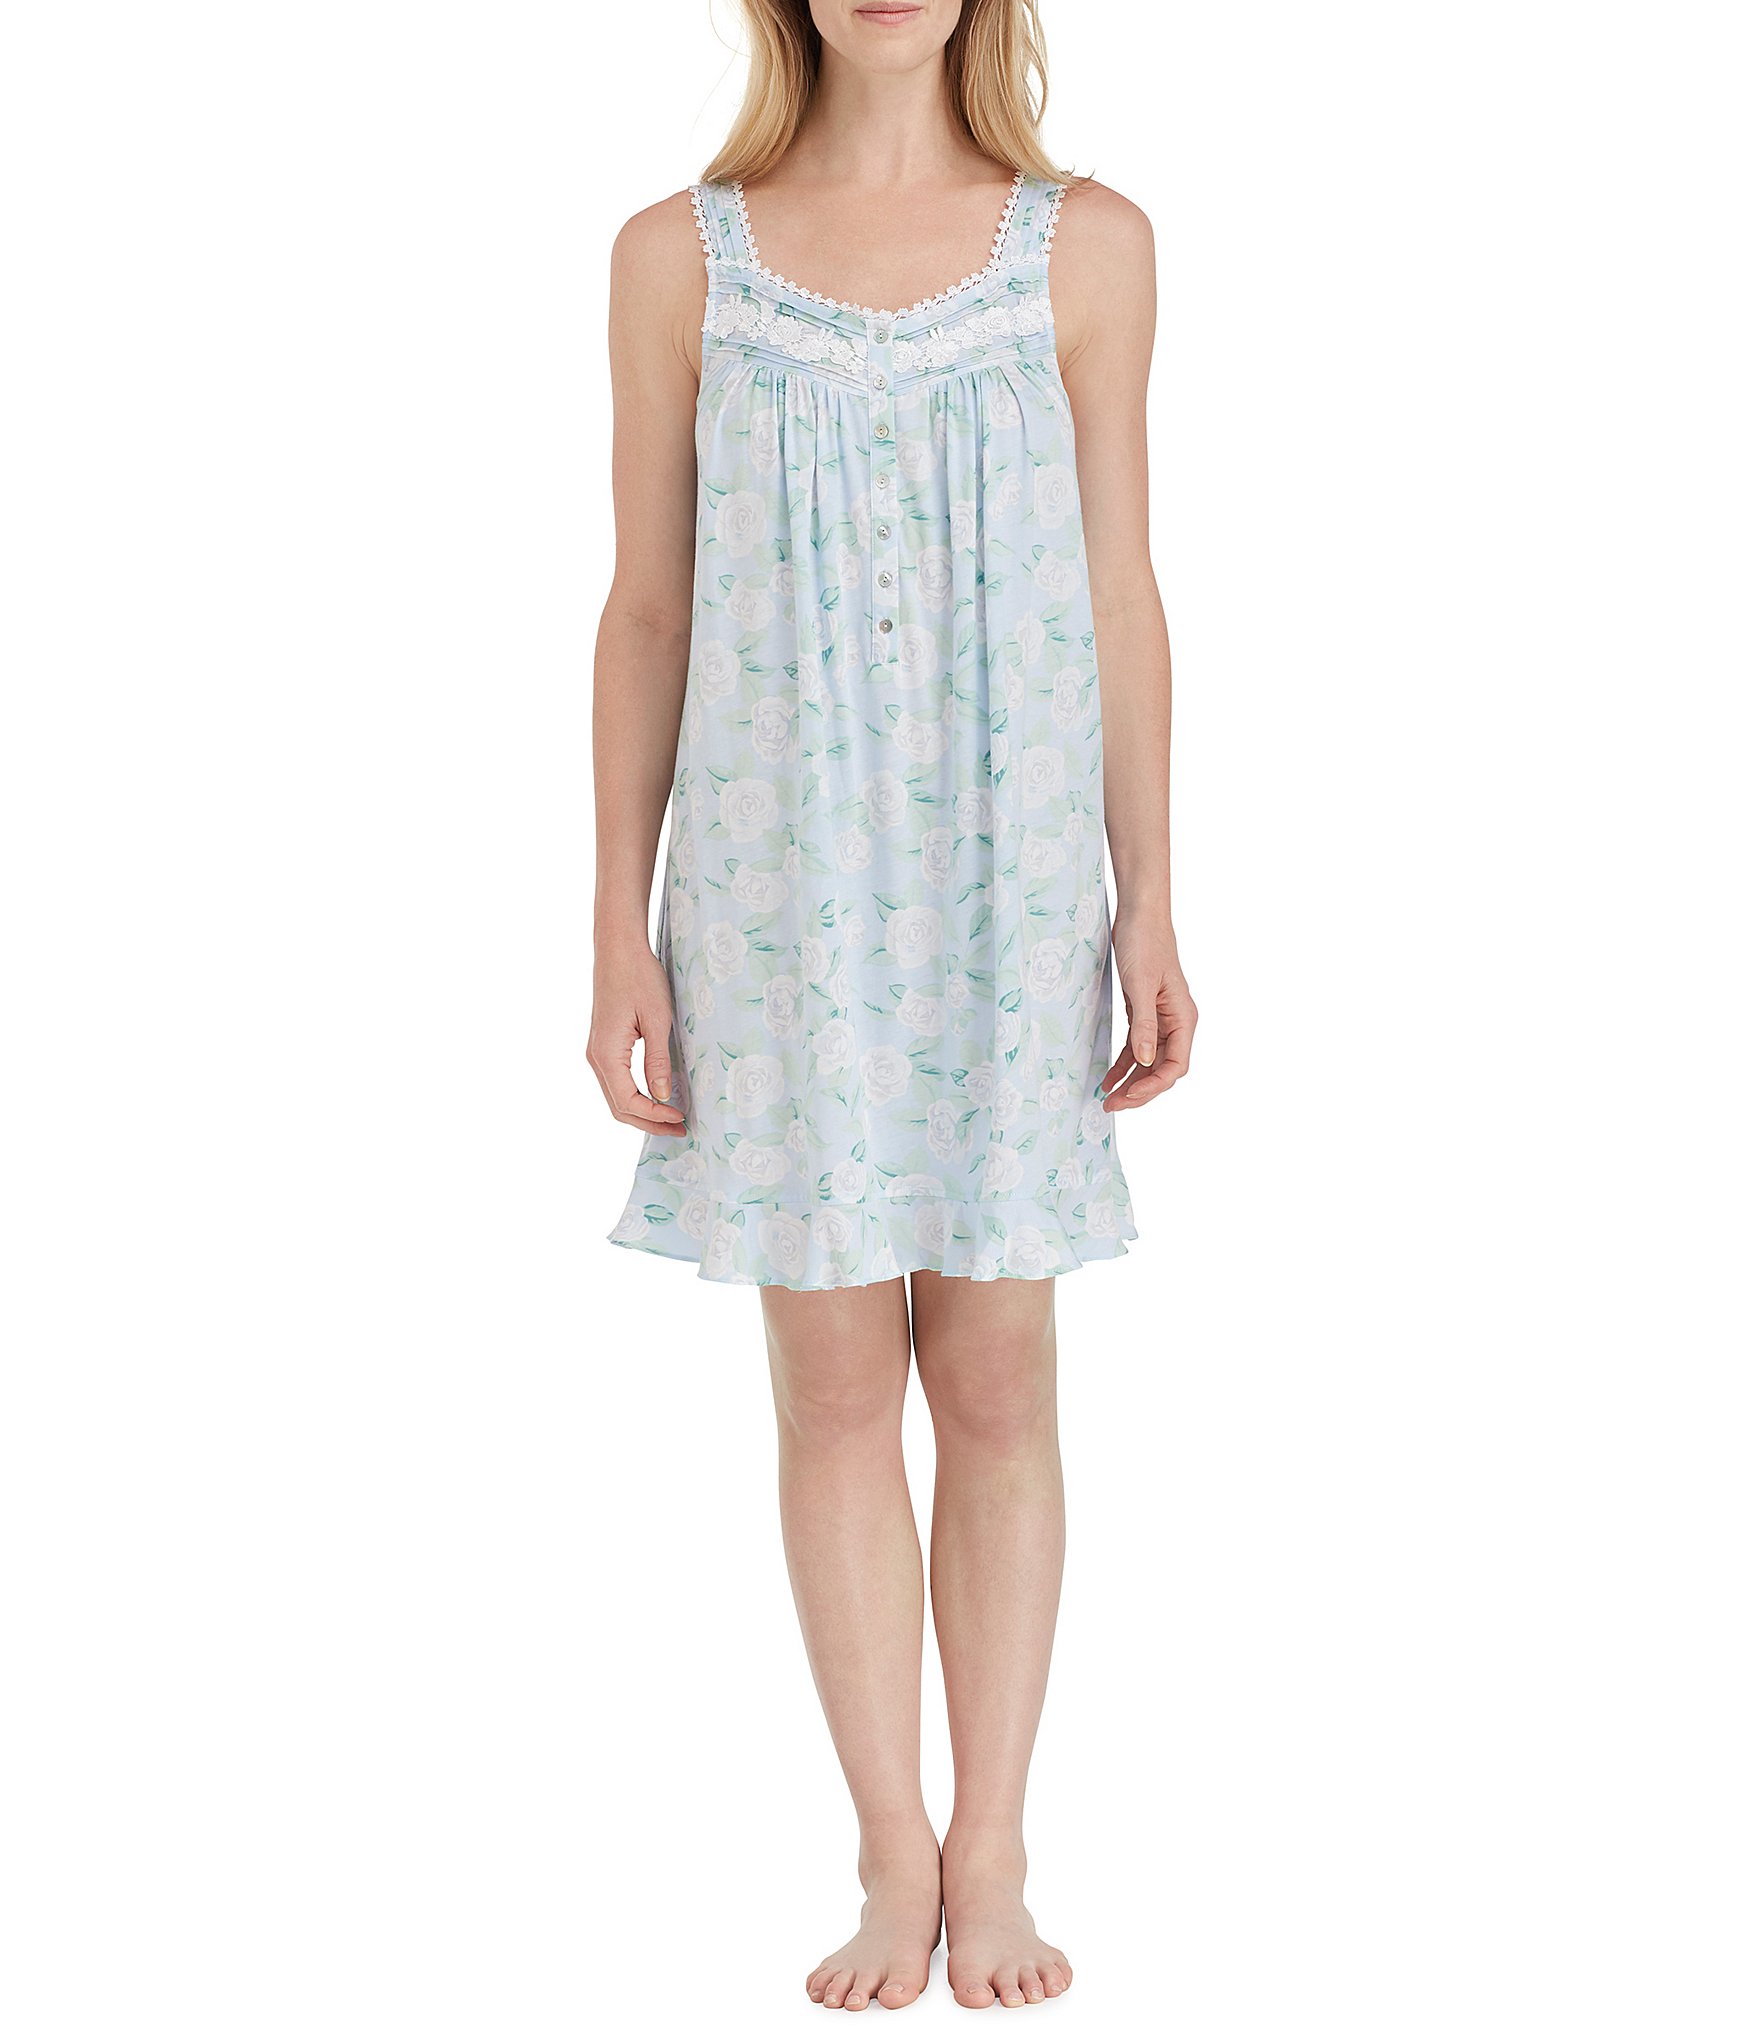 Short Chiffon Nightgown – Fashion dresses